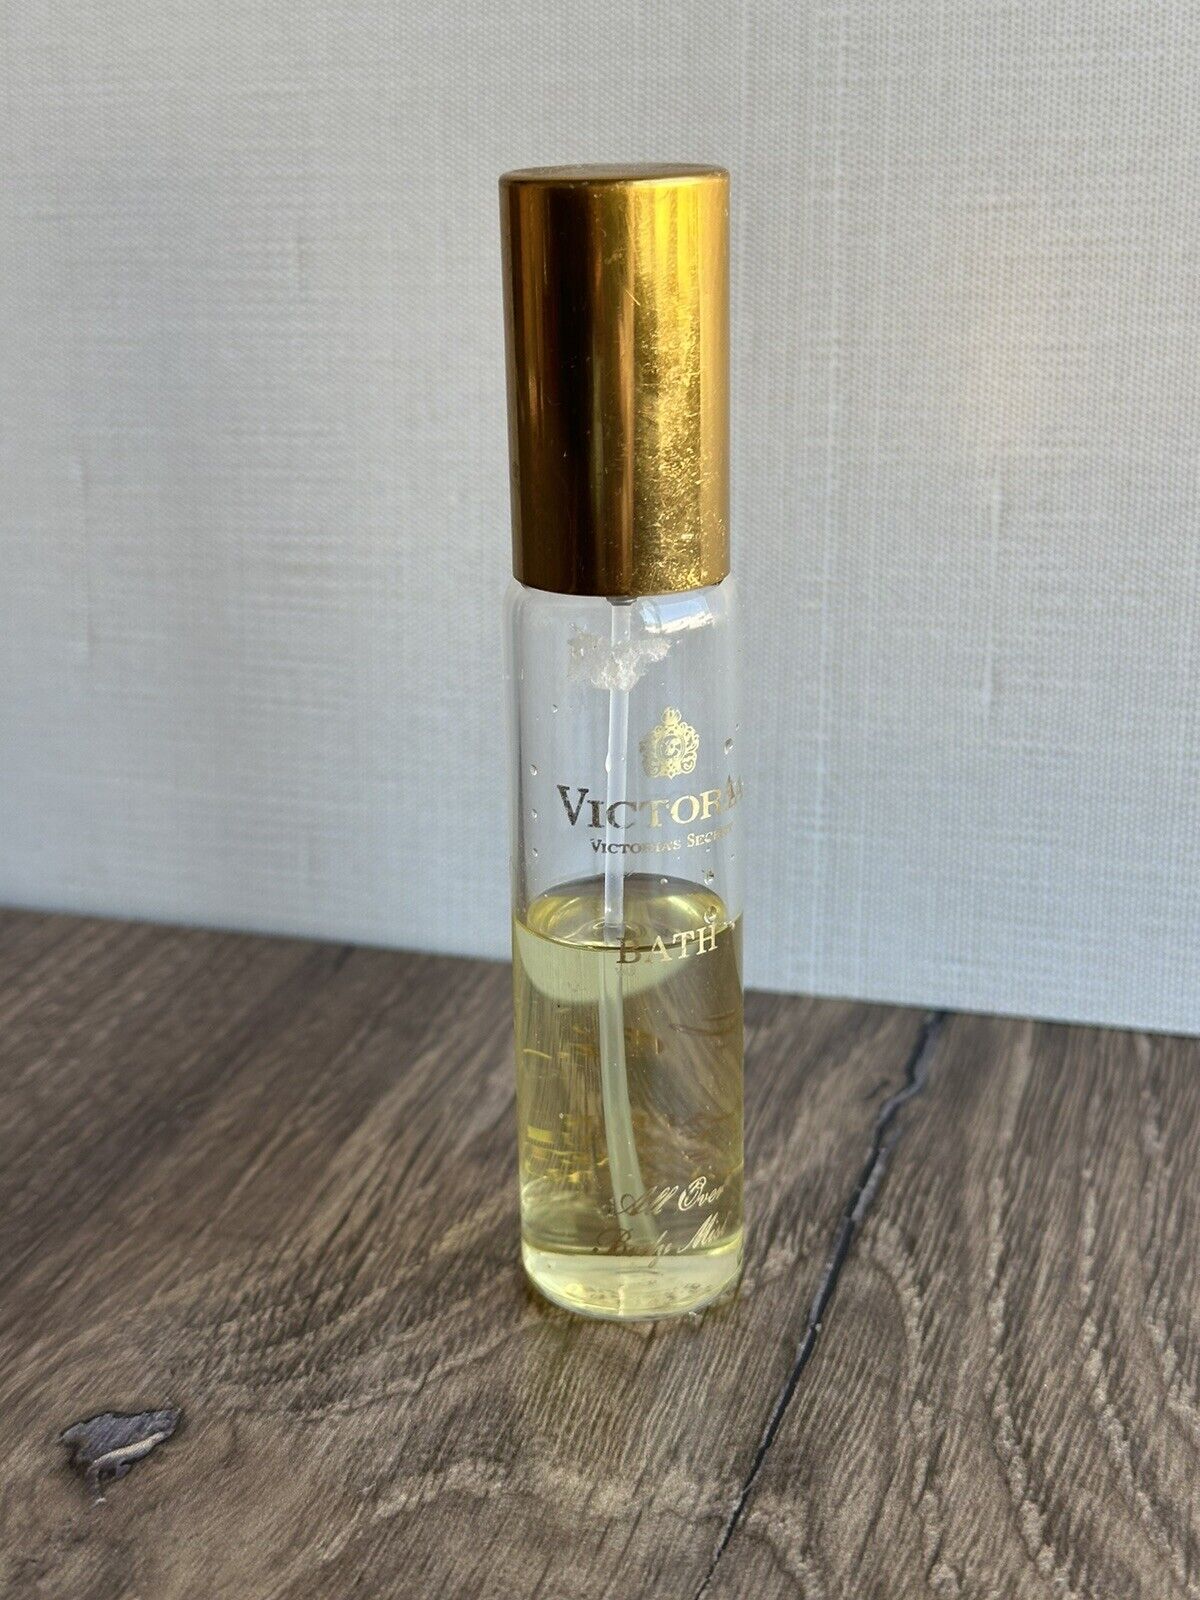 RARE Vintage Victoria’s Secret Bath Body Mist Perfume Spray Early 1990’s 1 oz